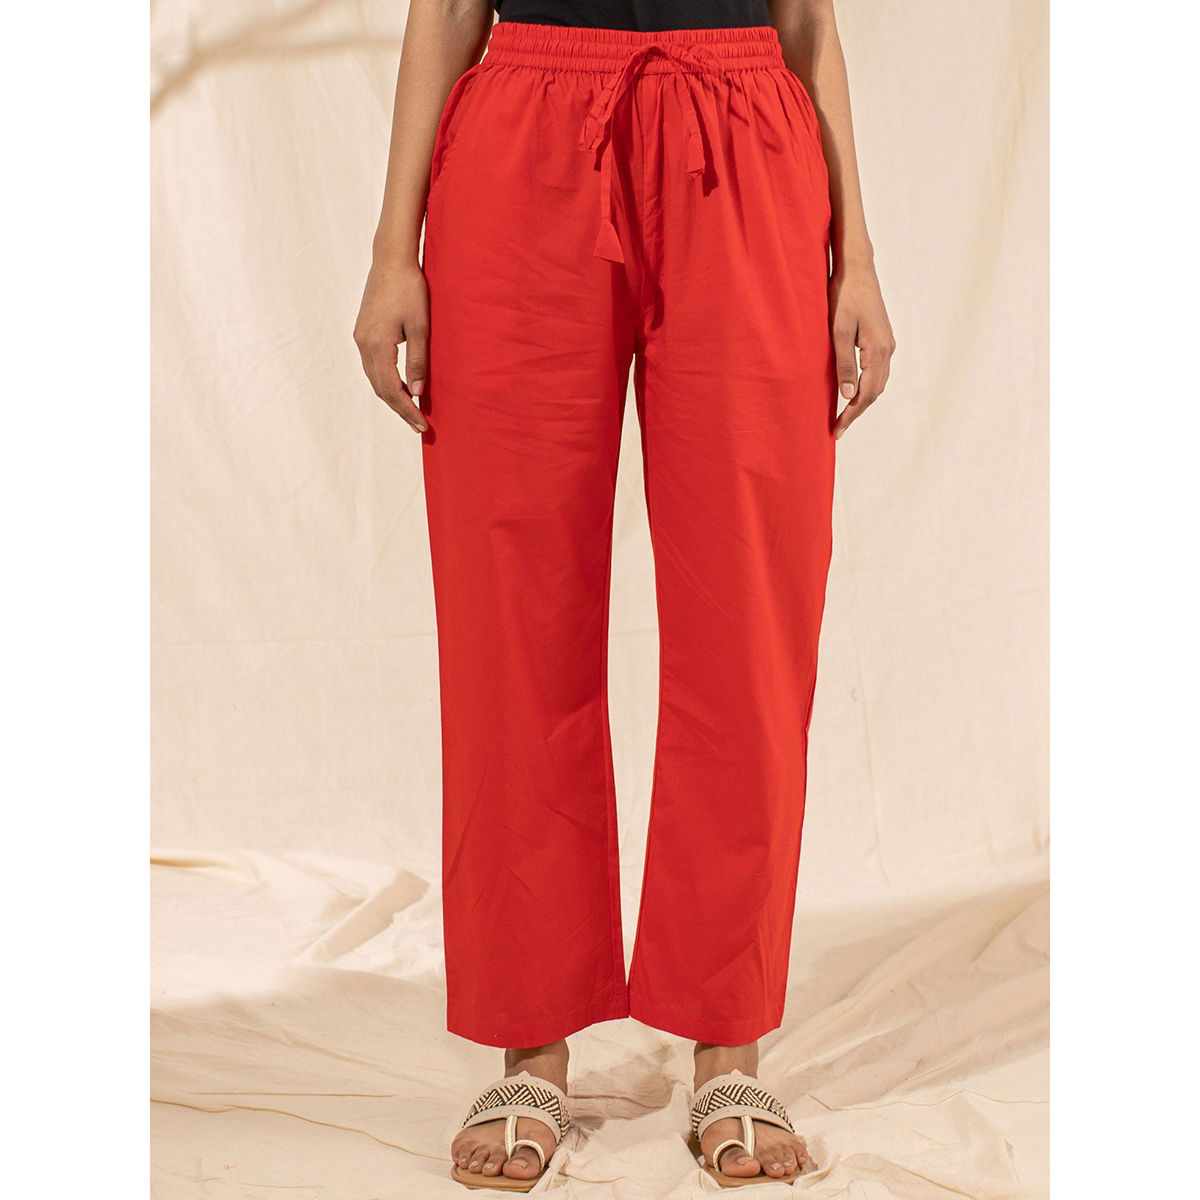 Buy Brick Red Wide Leg Pants For Women Online in India  VeroModa